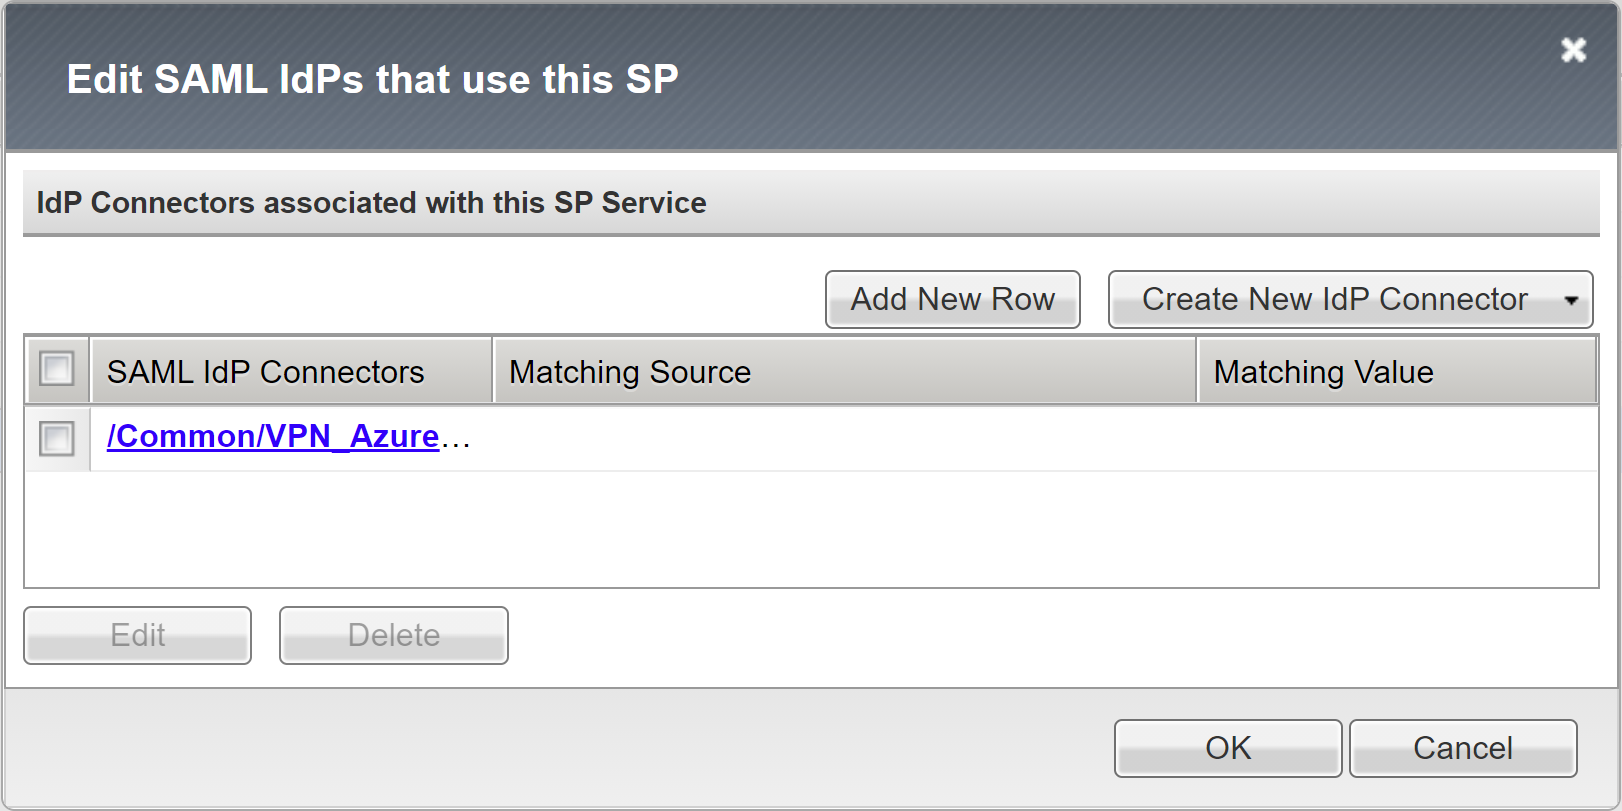 Image shows SAML IDP using SP